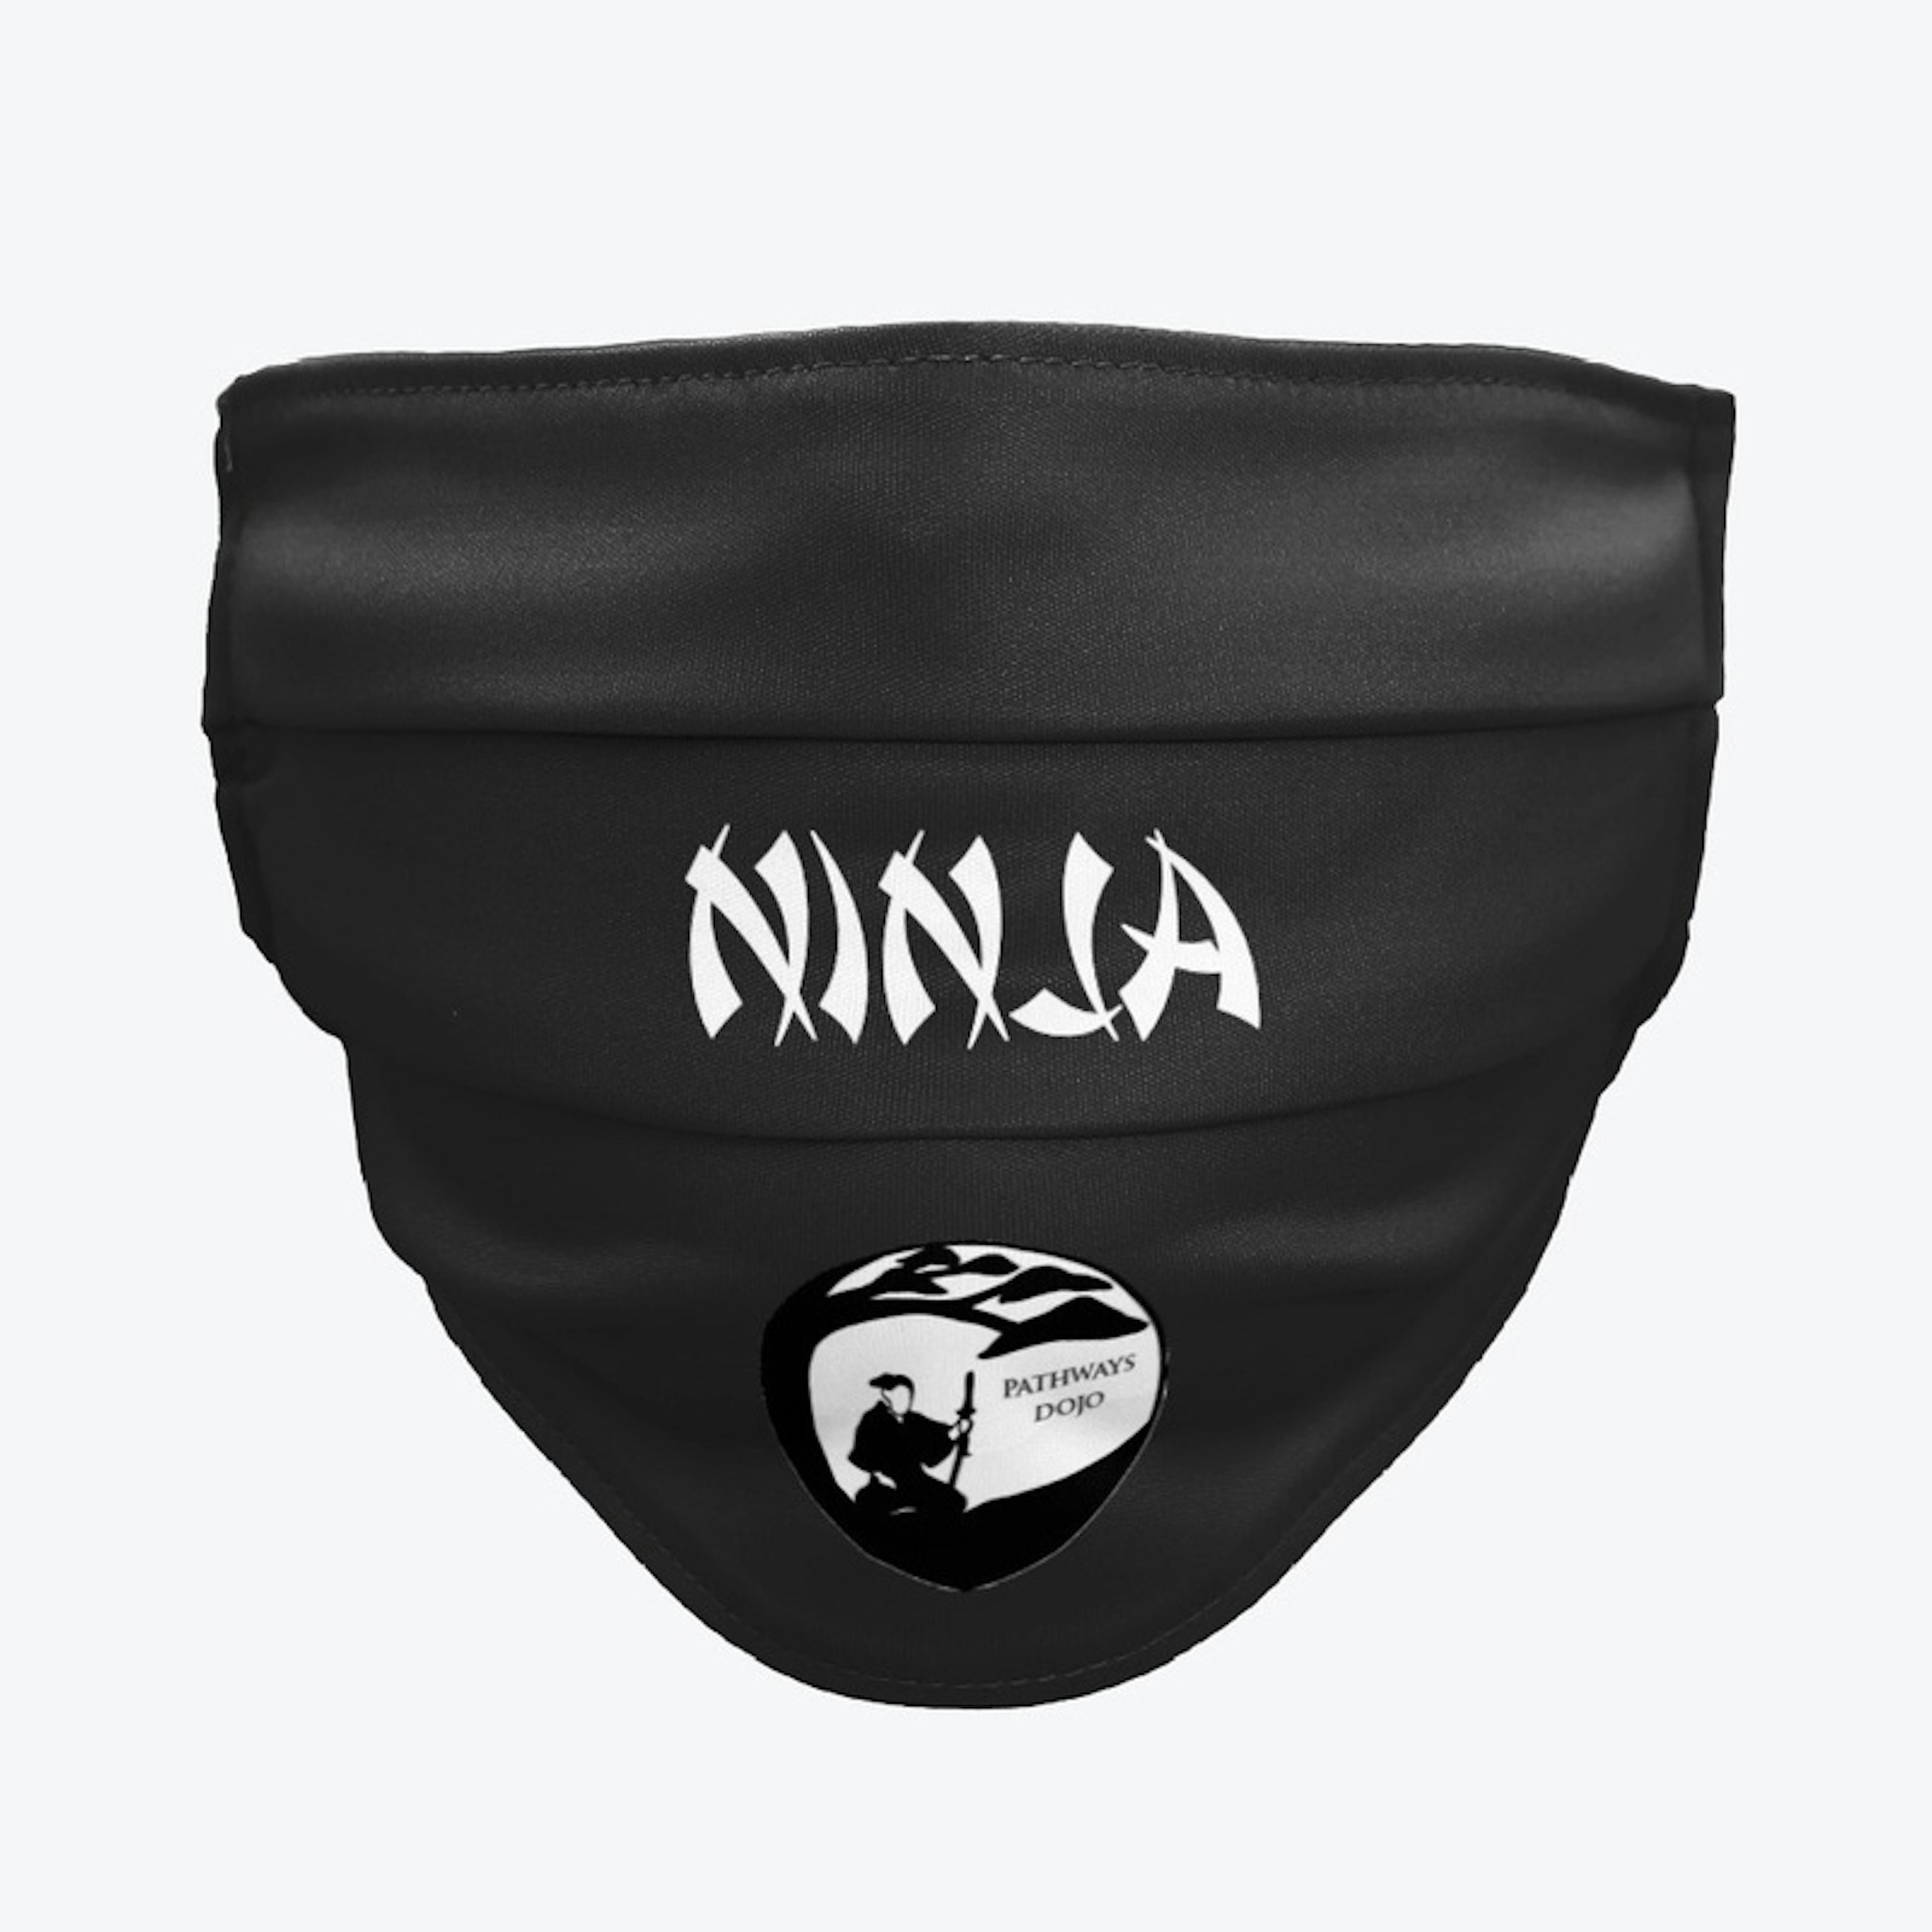 Pathways ninja facemask